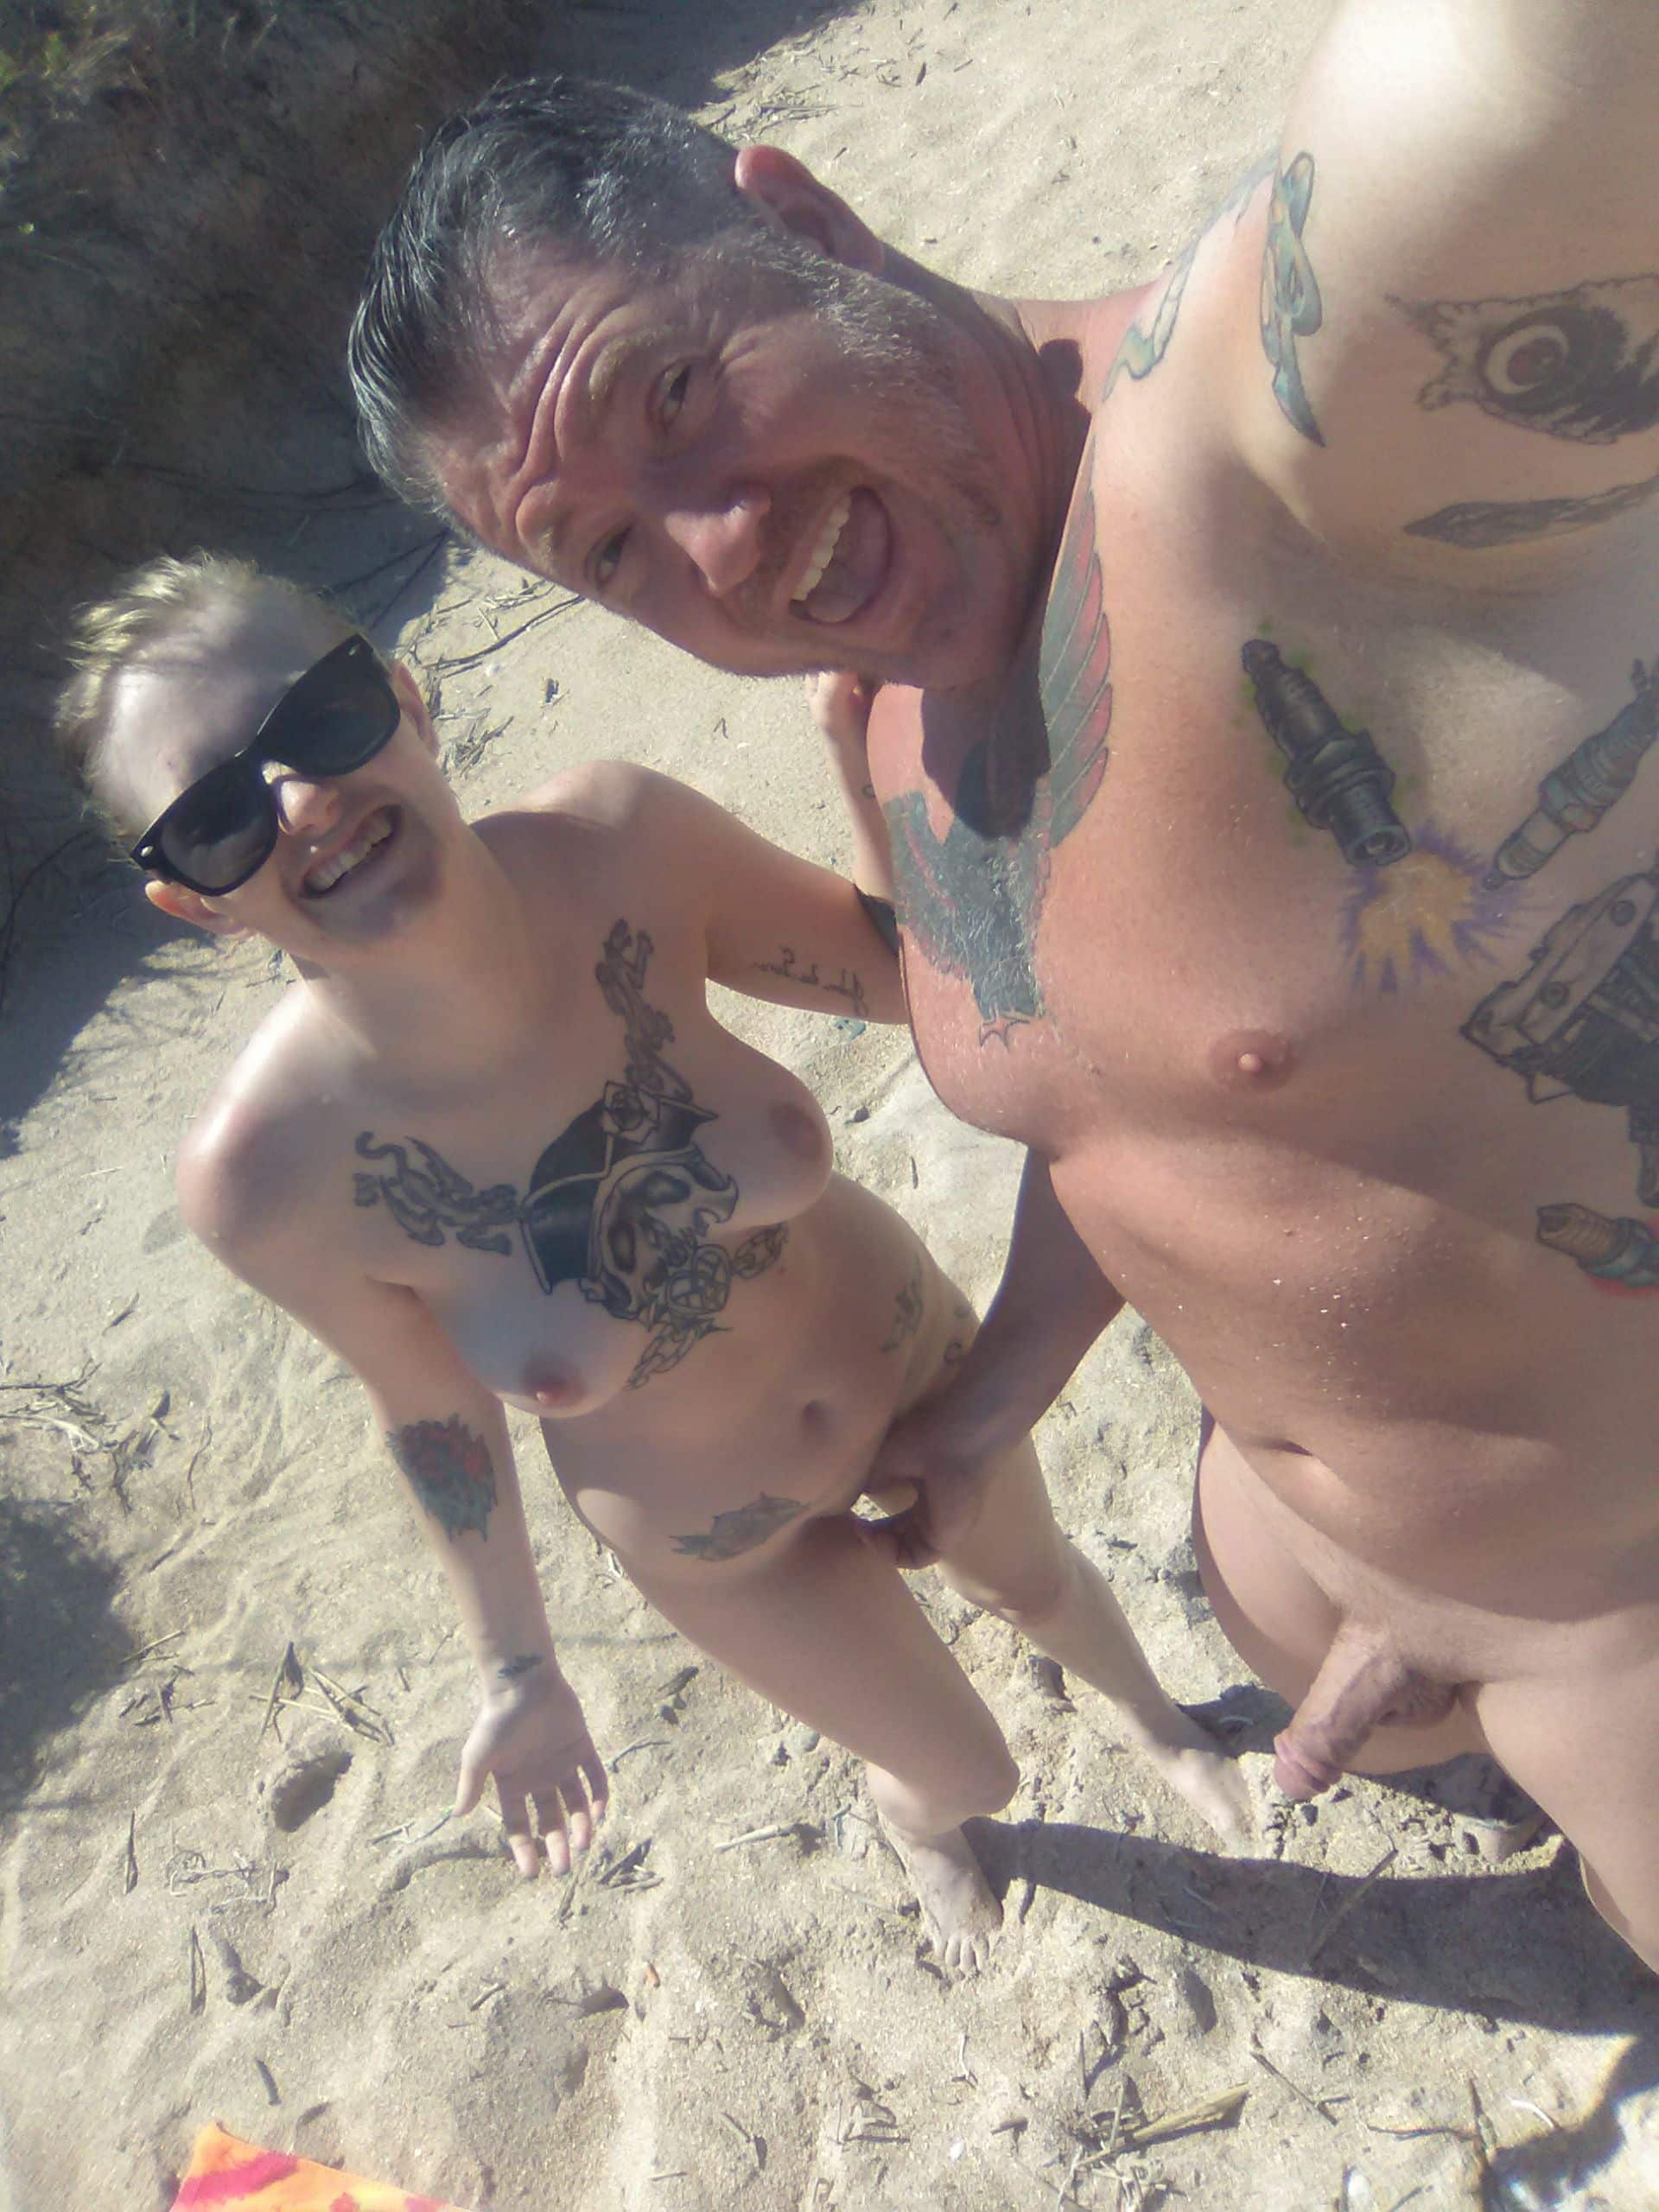 hotwife slut beach exhibitiomist - Tattooed exhibionist couple Outdoor selfie Beach days selfies - Nude Beach Pics